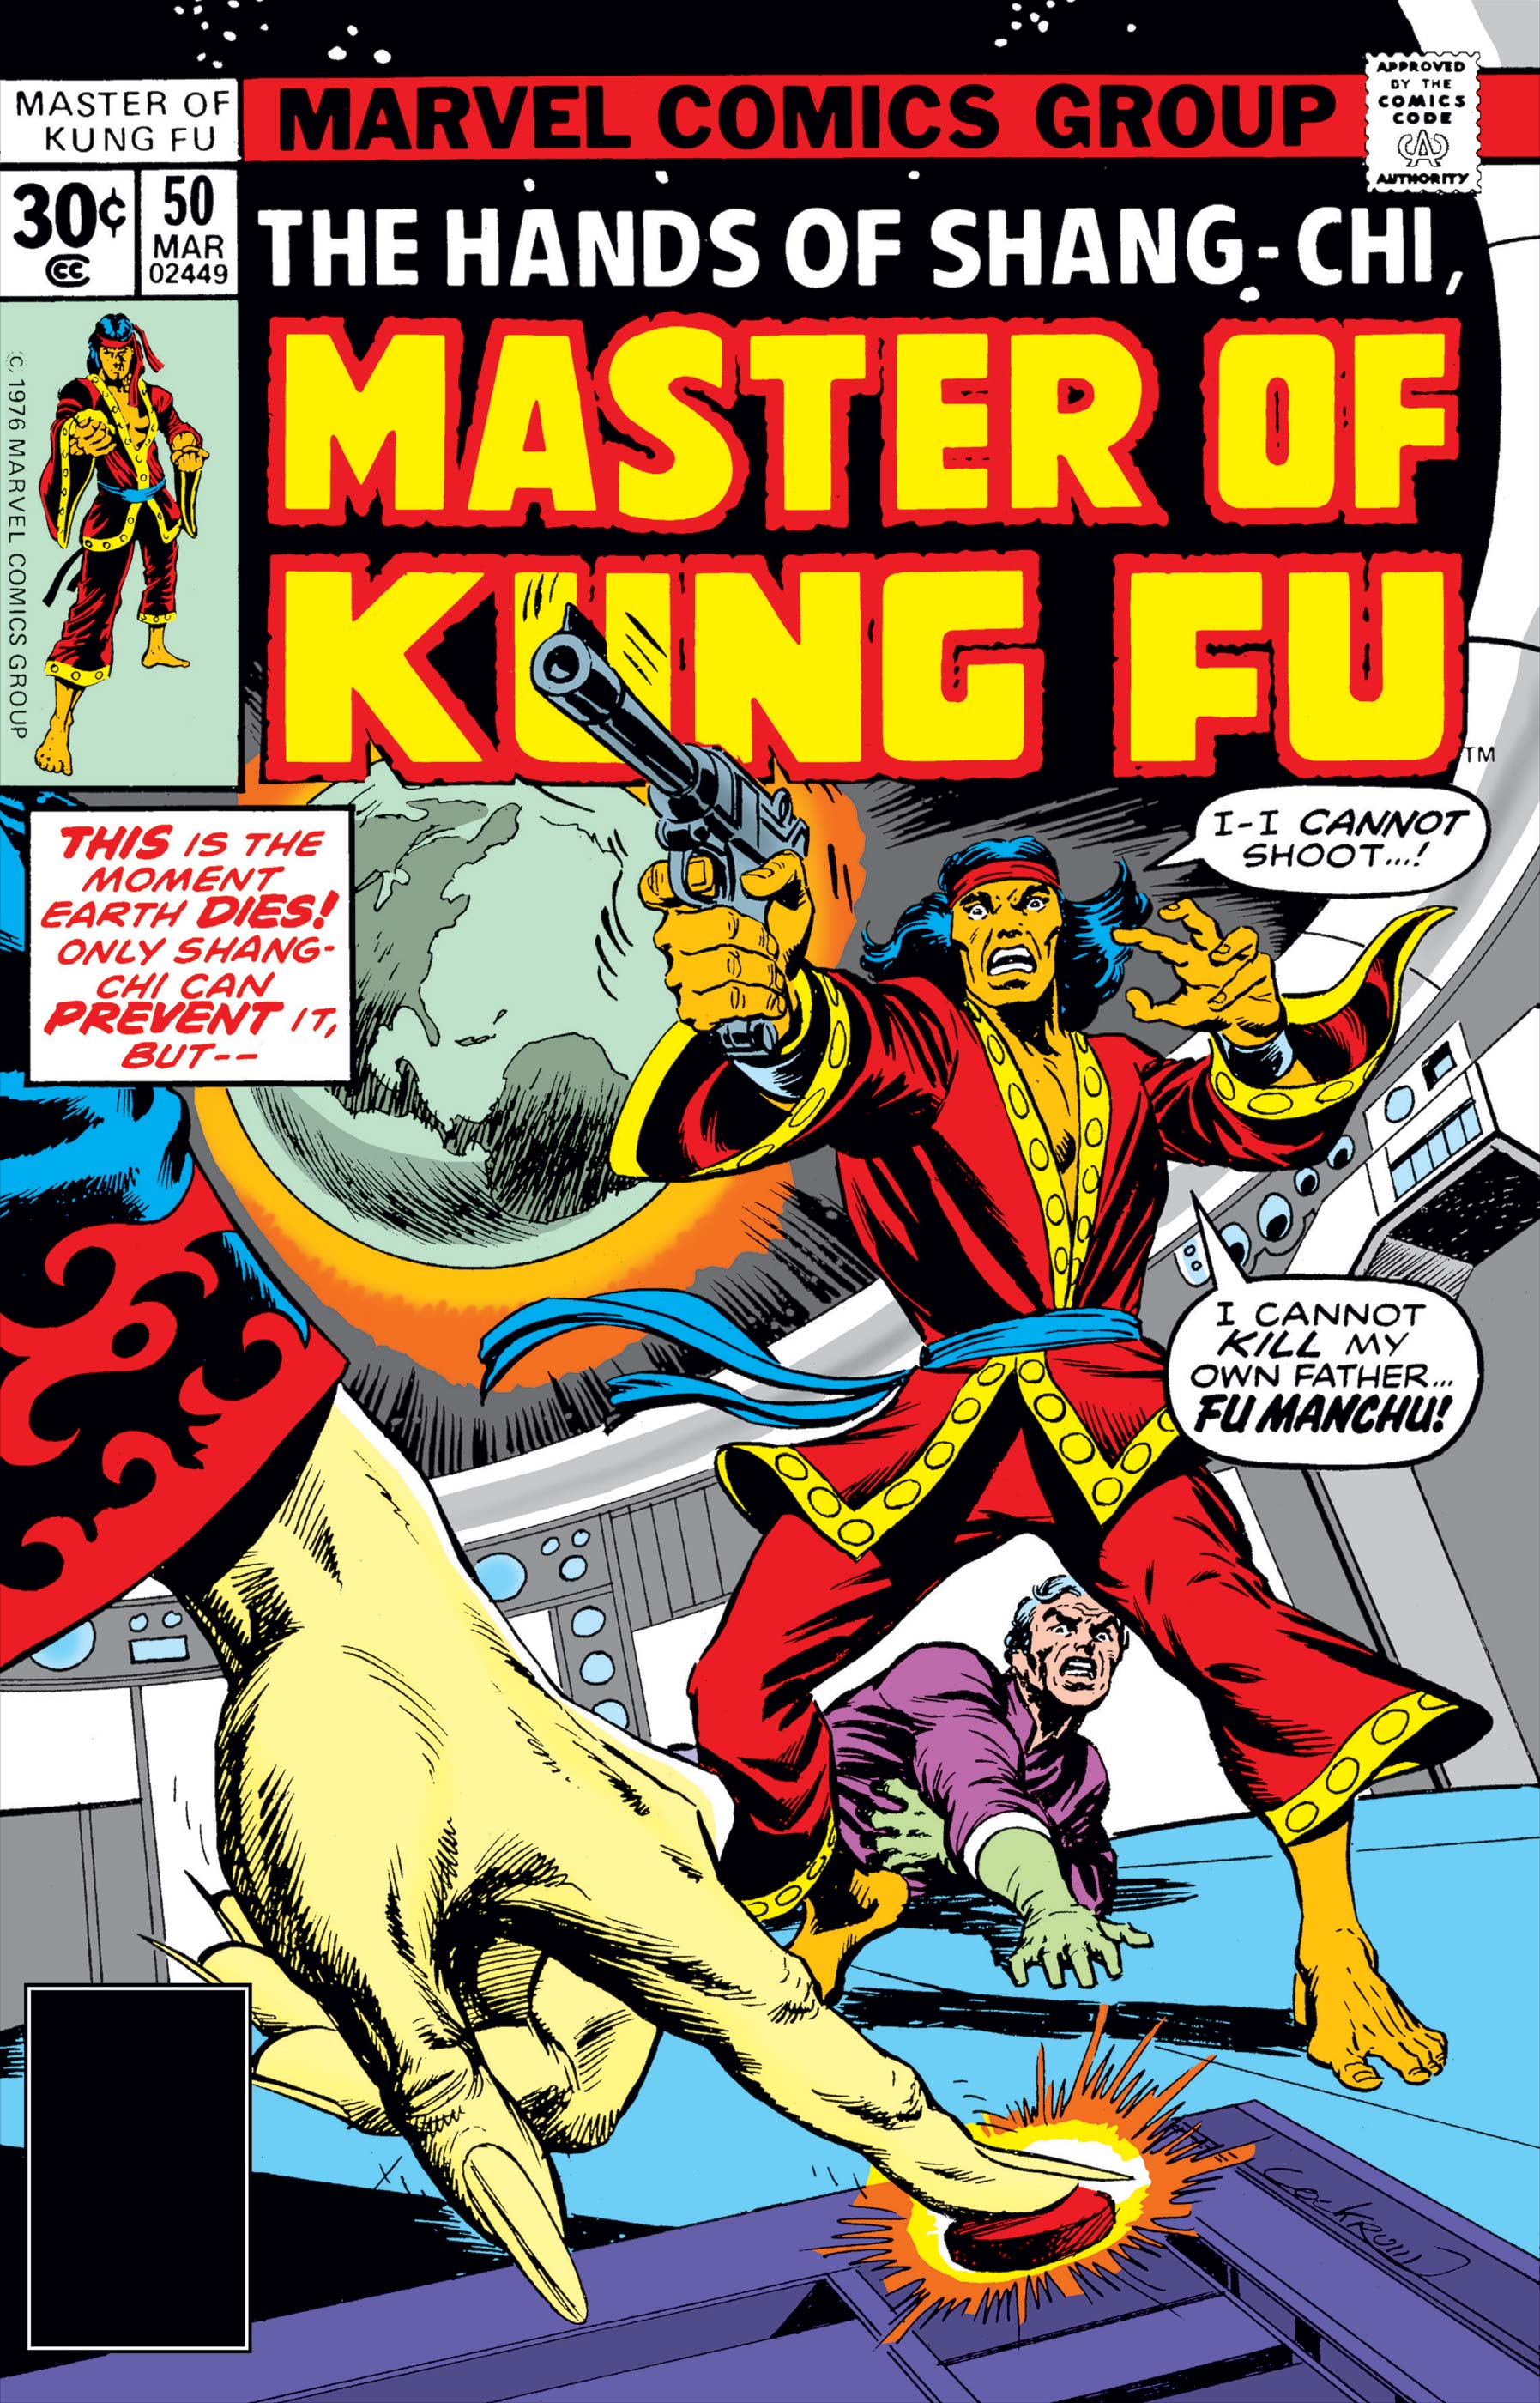 Master of Kung Fu (1974) #50